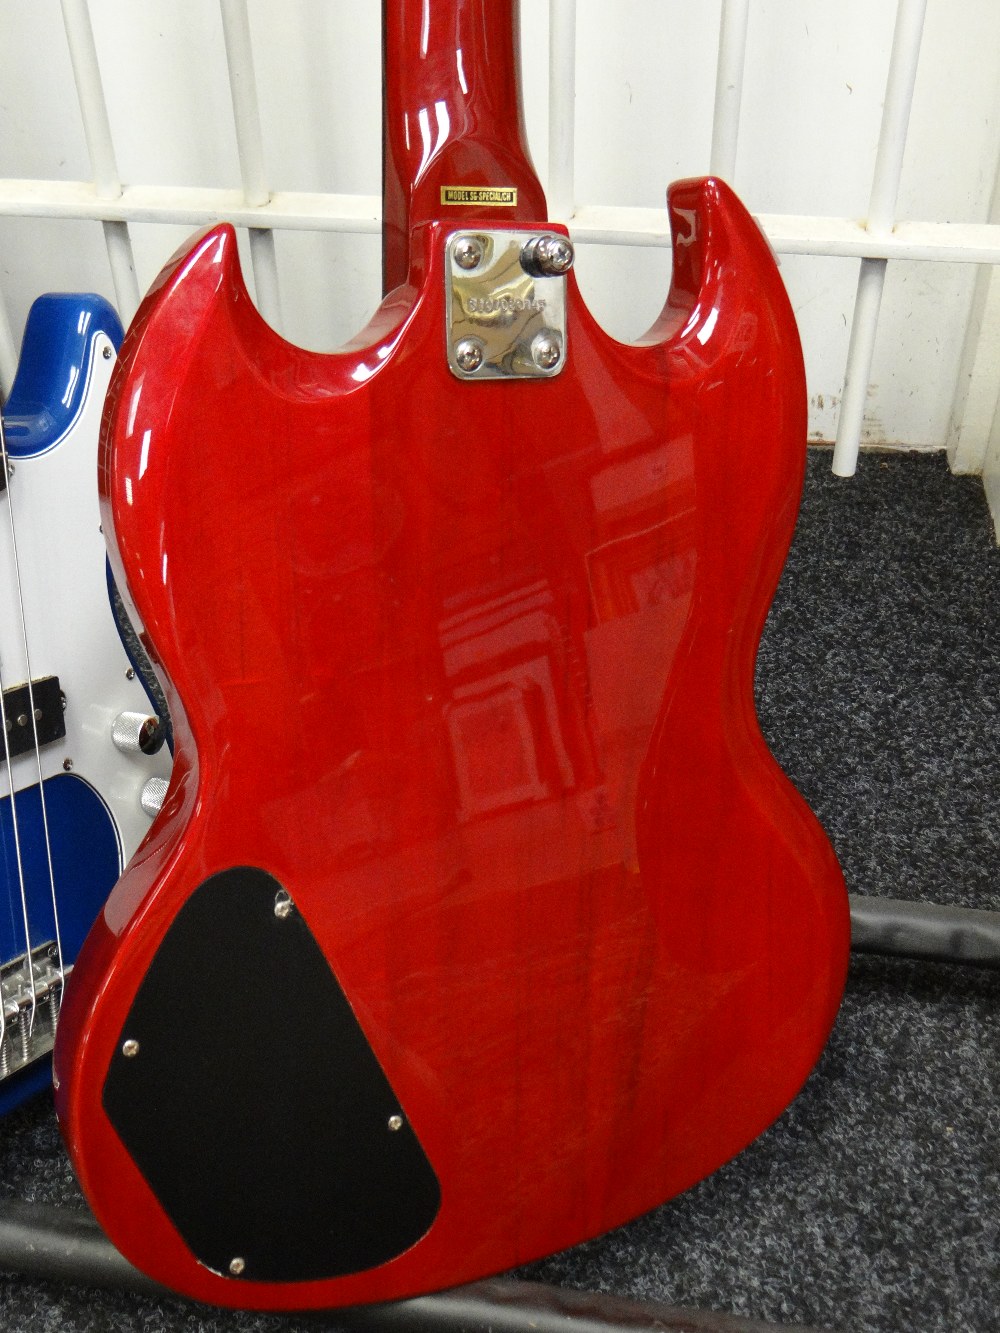 A replica Epiphone electric guitar - Image 4 of 5